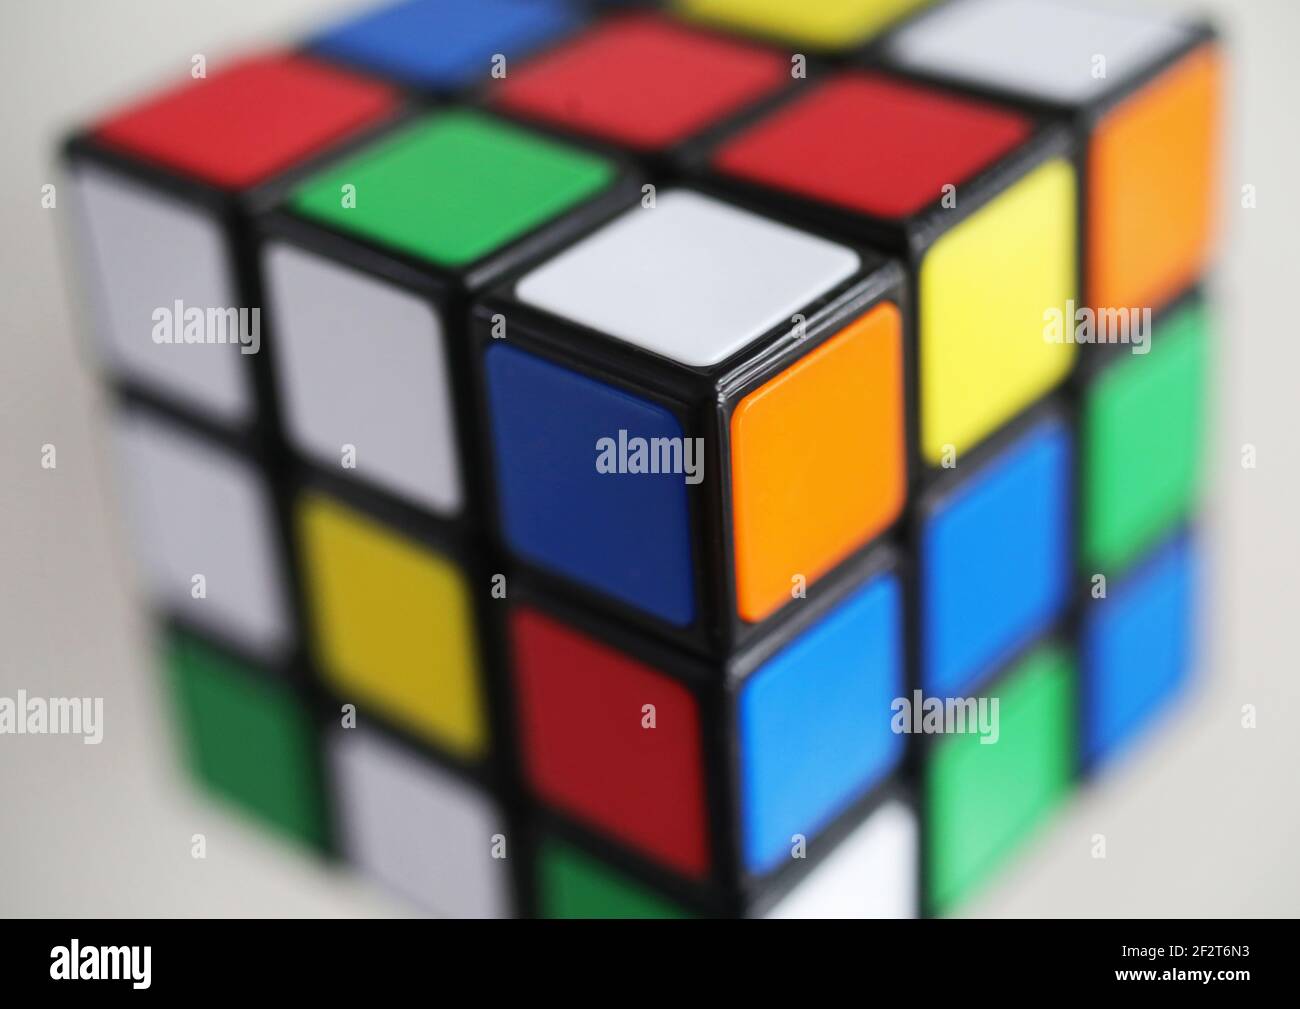 > Museum > Maze Cube (3x3x3)